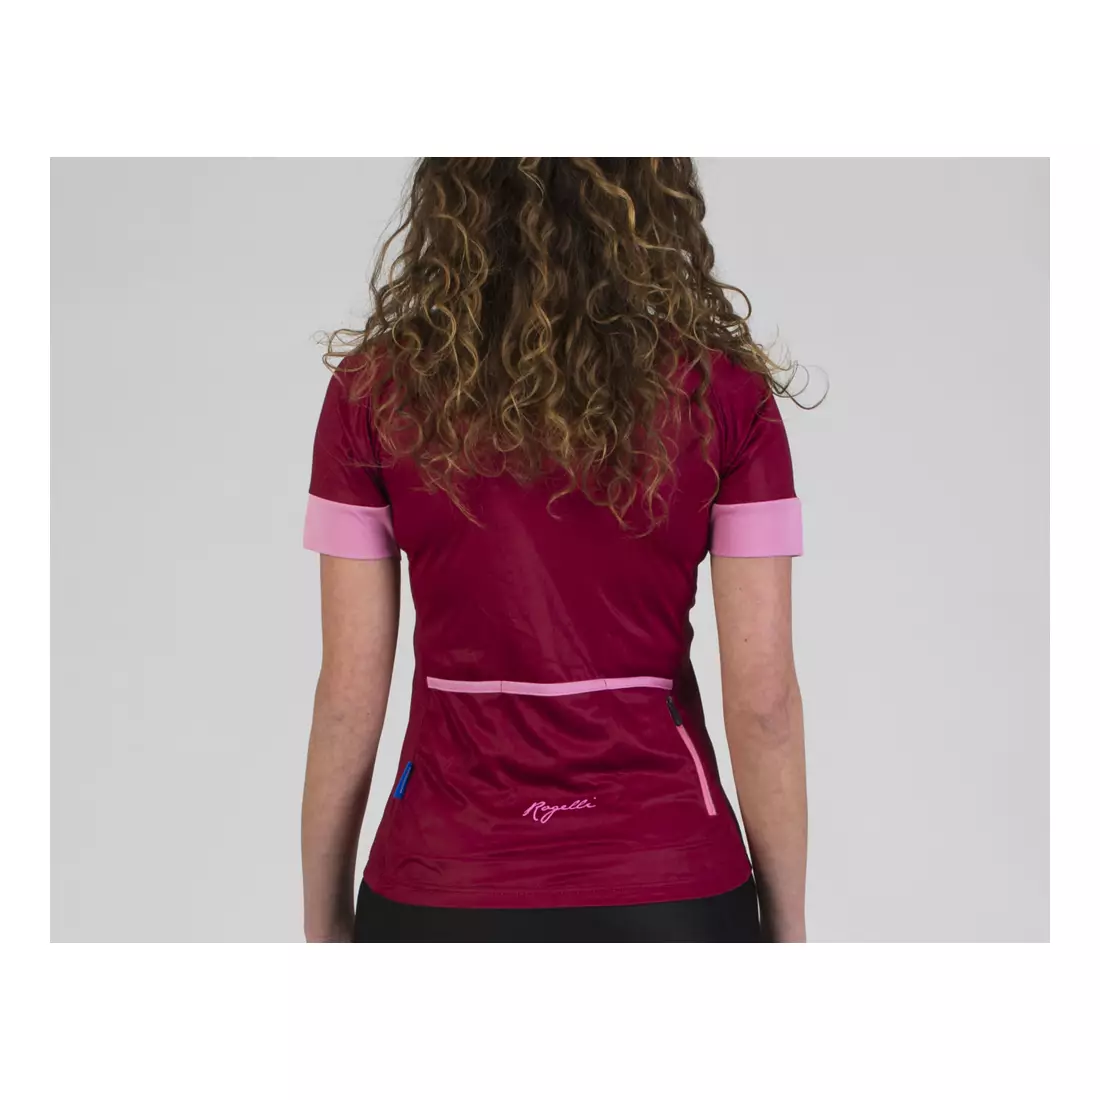 ROGELLI MODESTA women's cycling jersey, burgundy